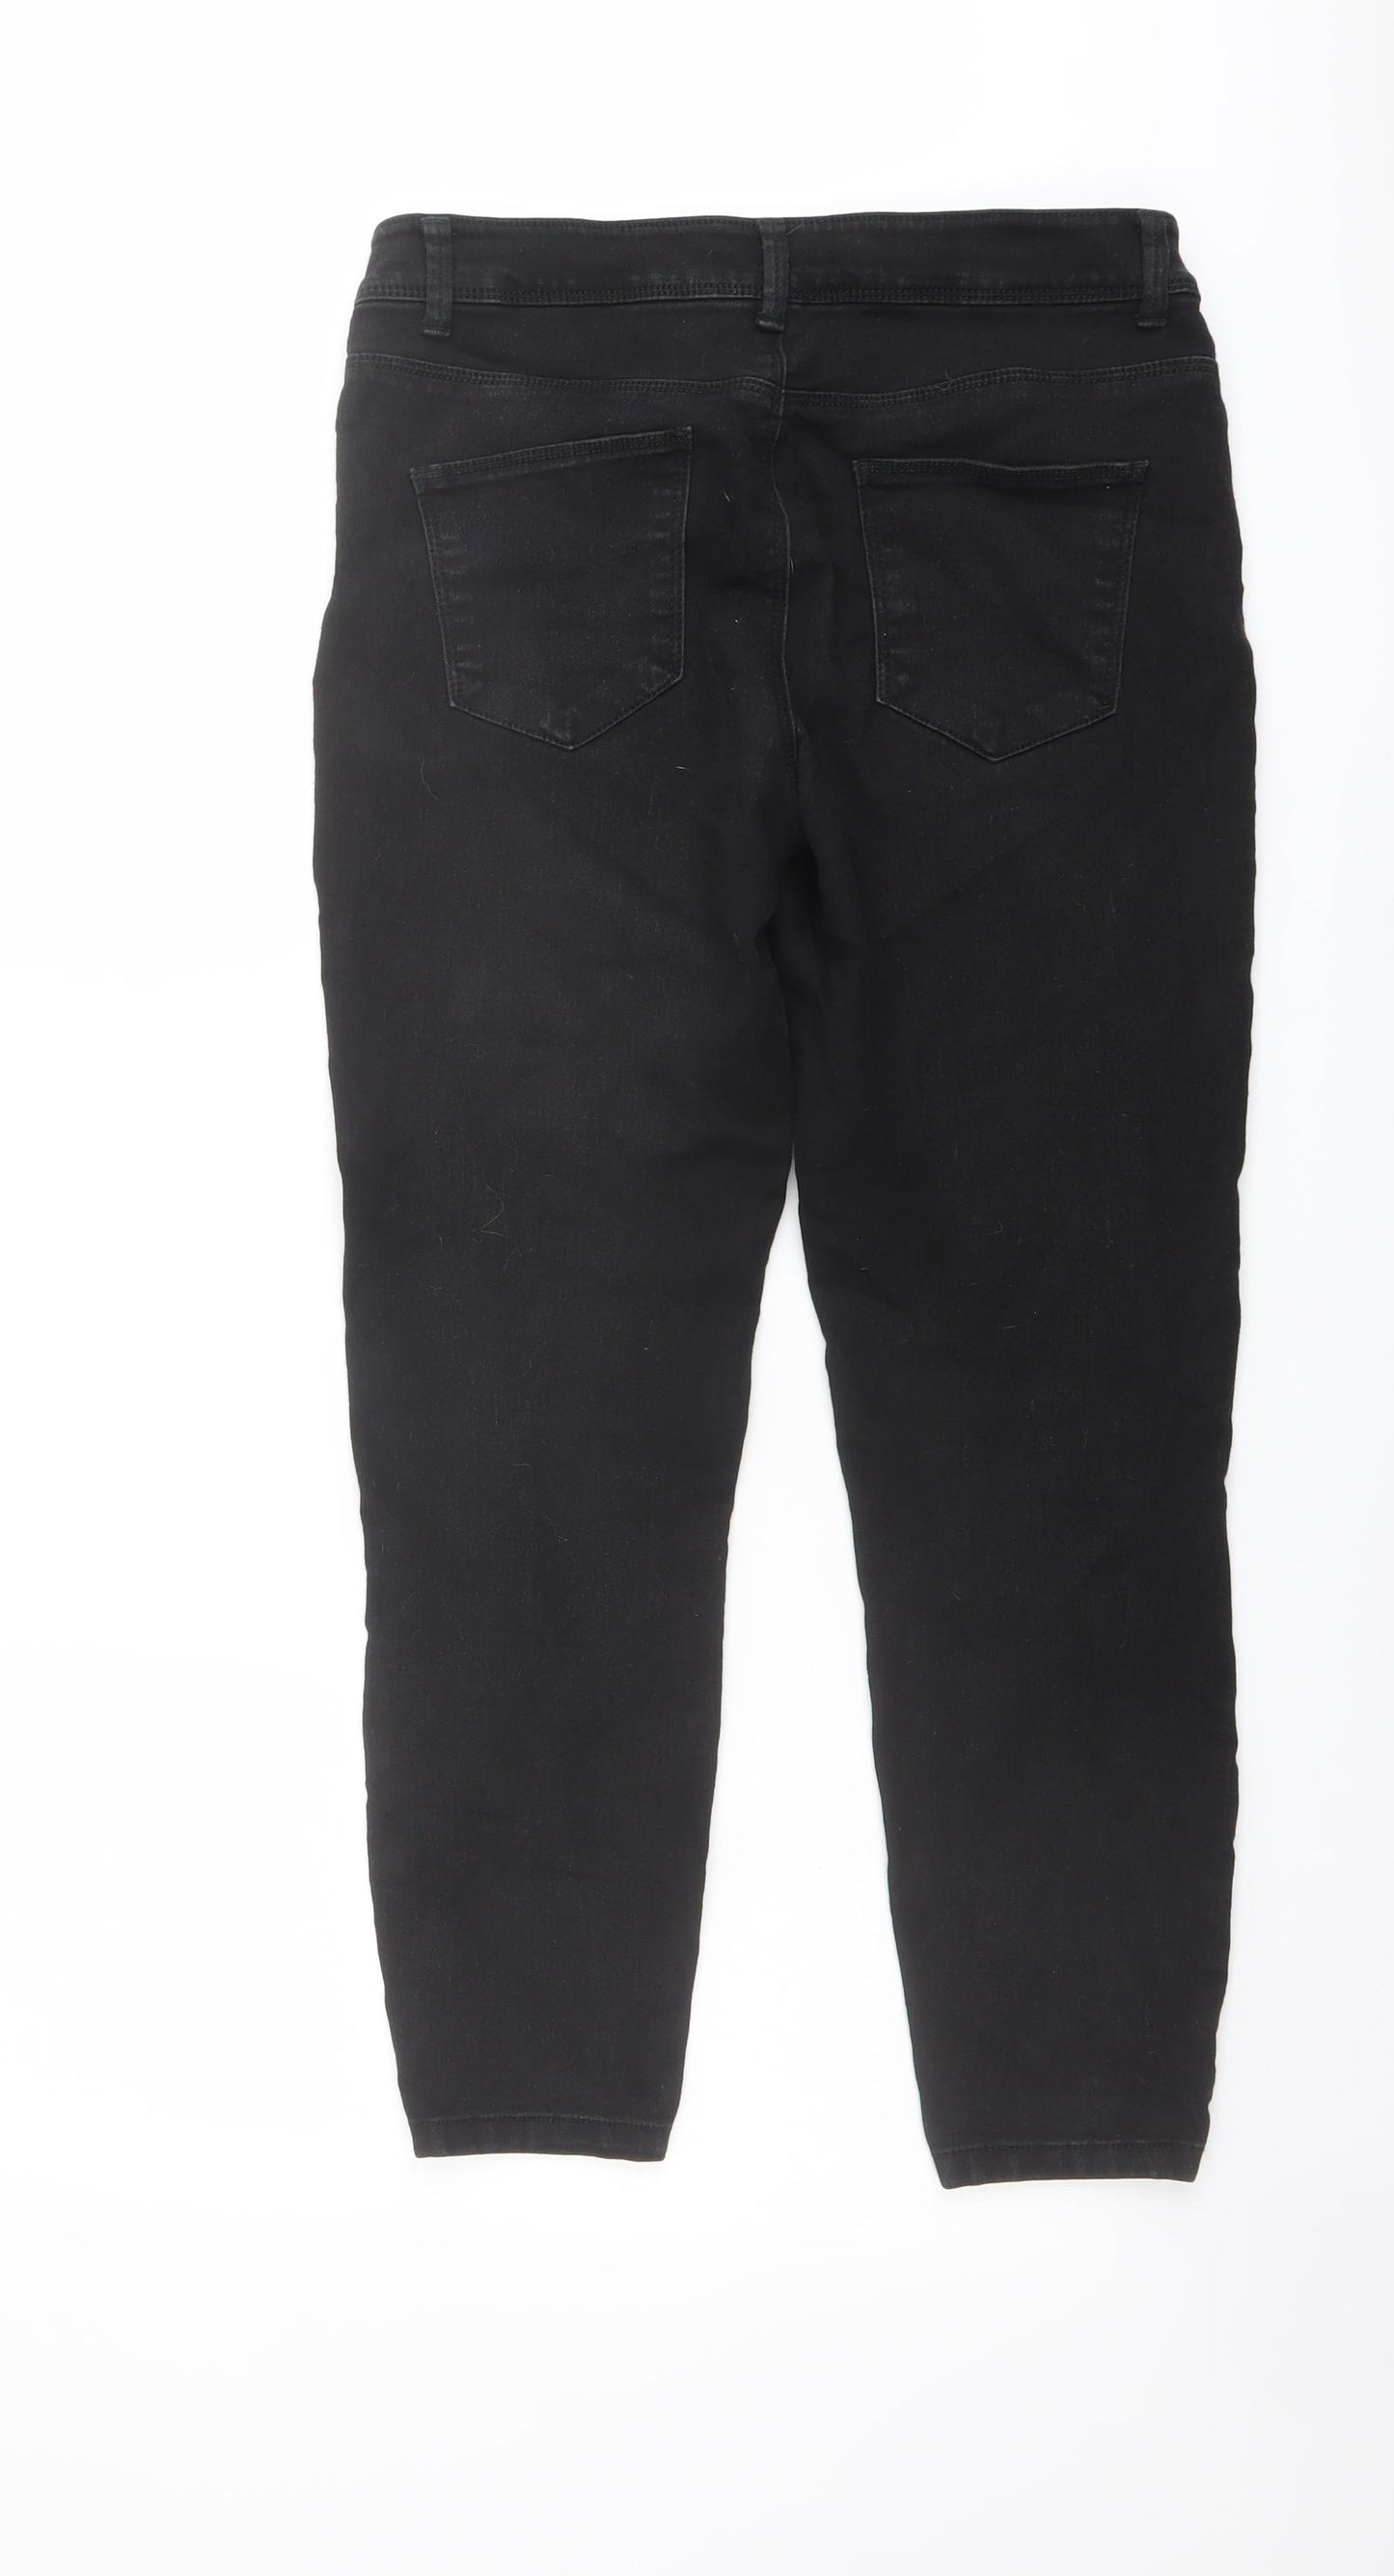 Denim & Co. Womens Black Cotton Straight Jeans Size 12 L26 in Regular Button